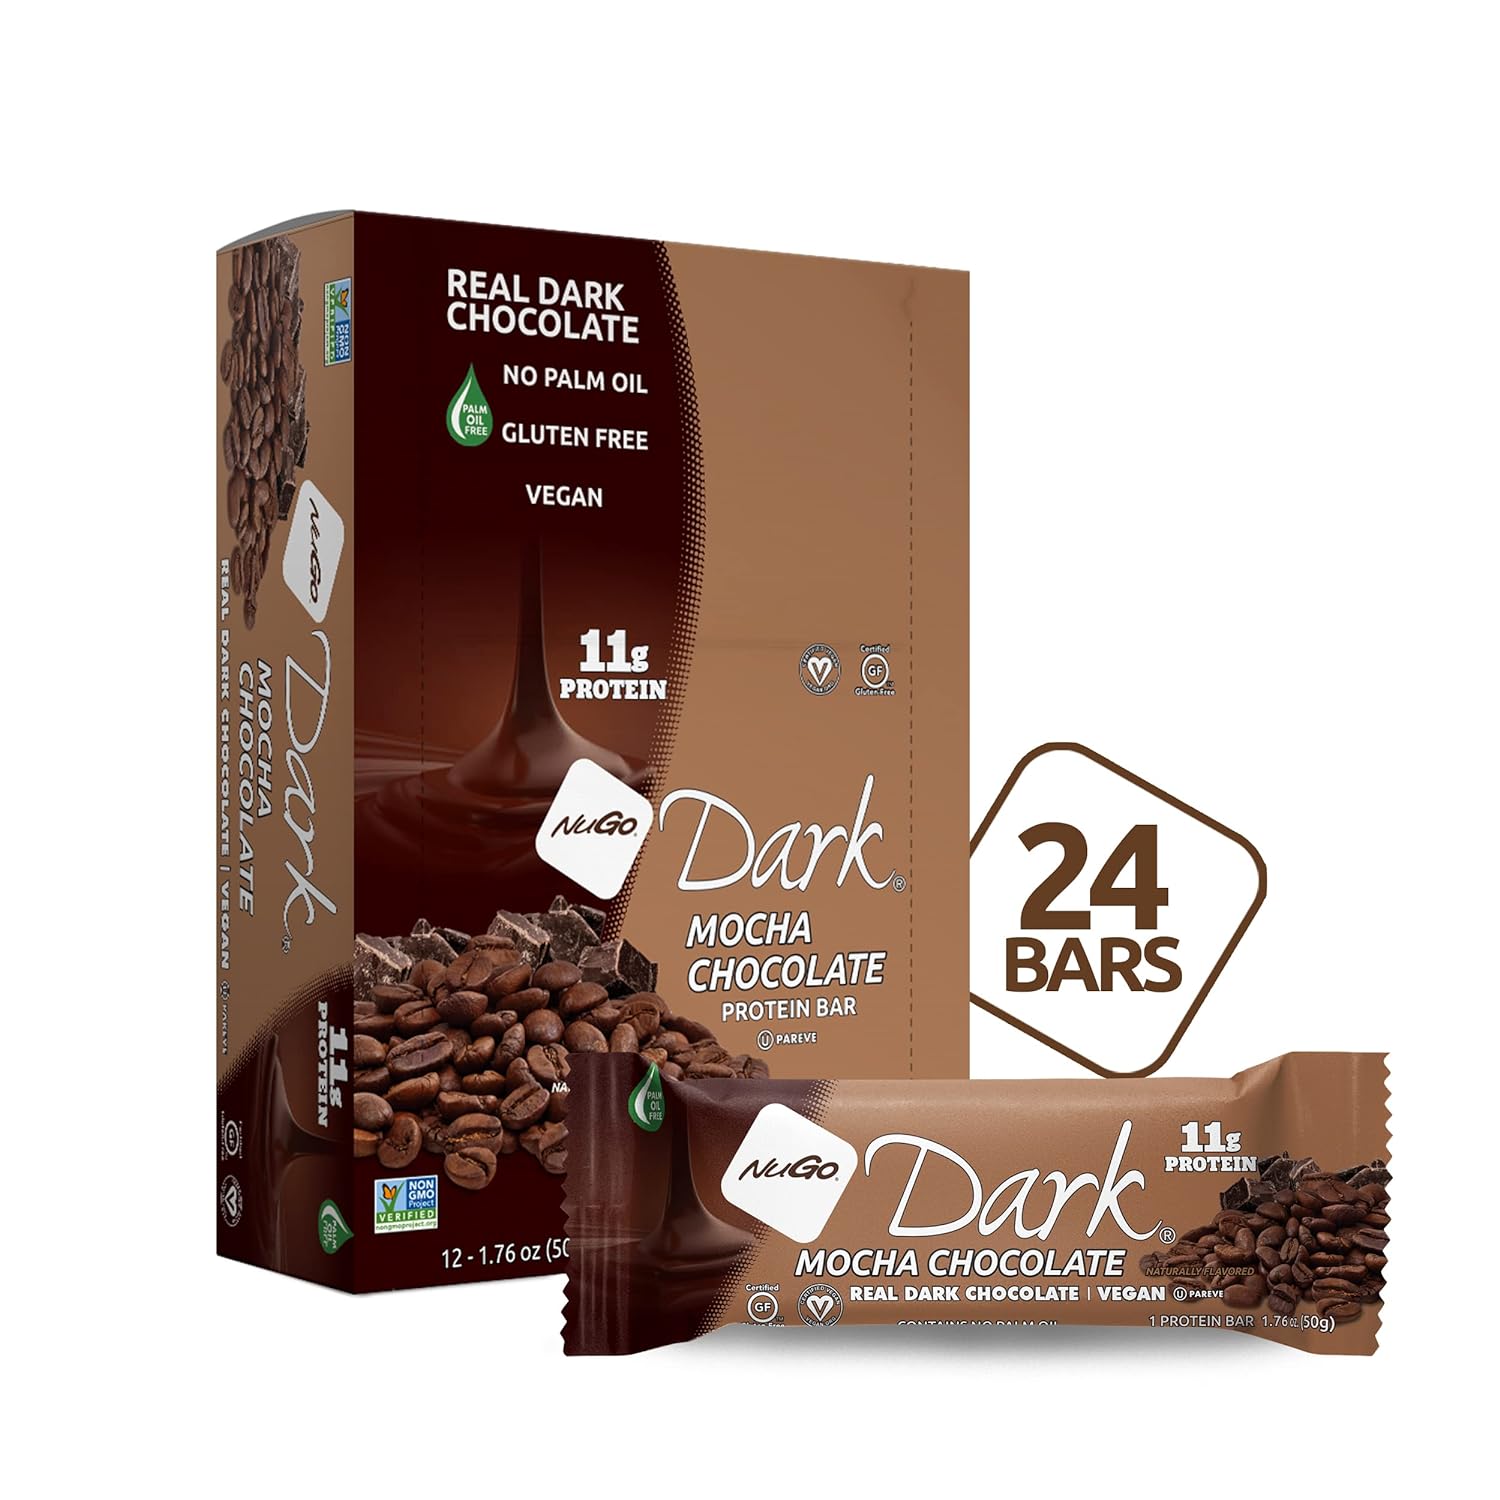 NuGo Dark Chocolate Mocha, 11g Vegan Protein, 200 Calorie, Gluten Free